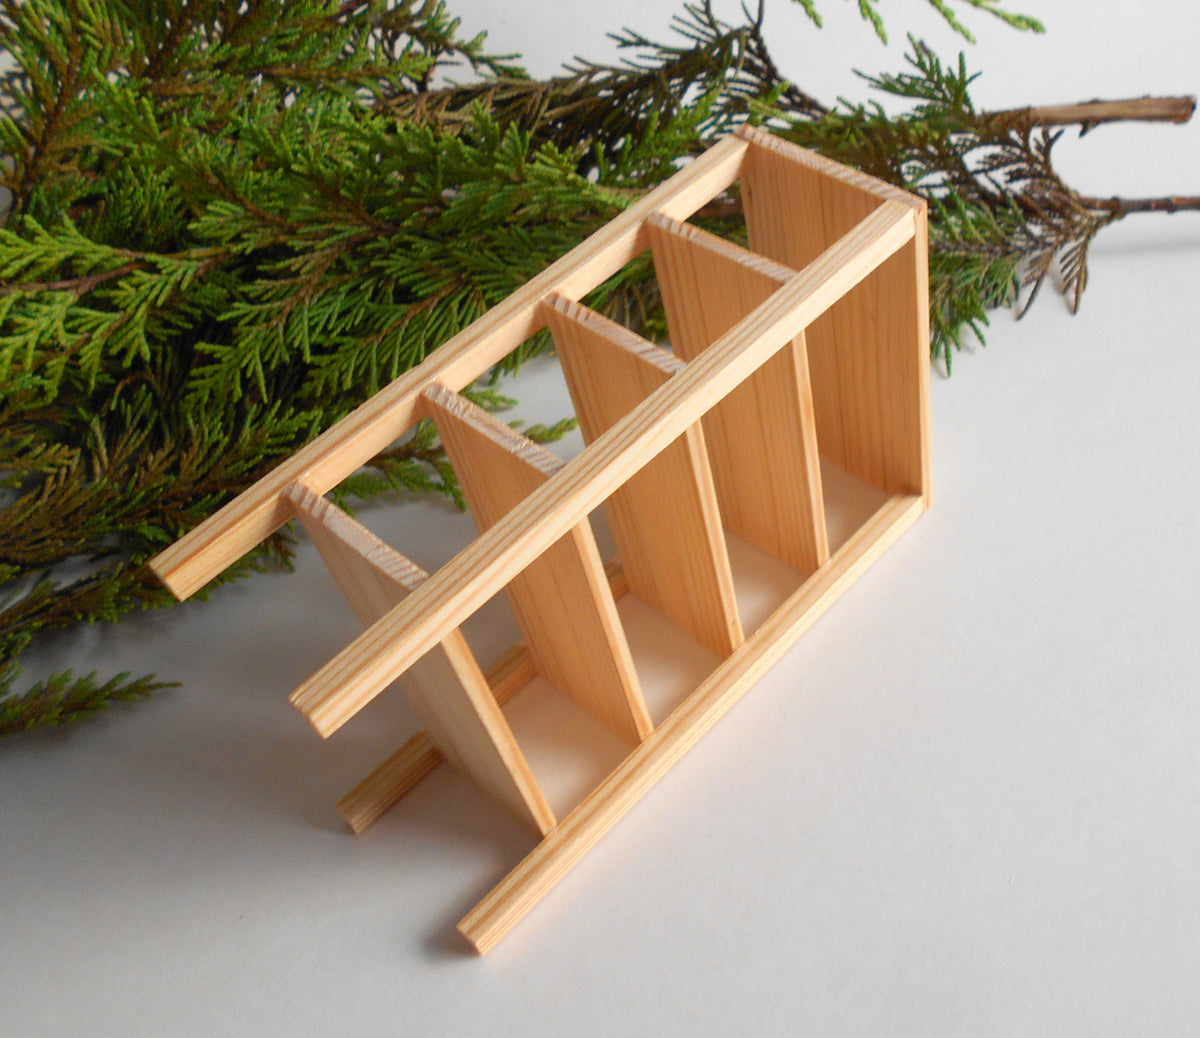 Miniature wooden shelf